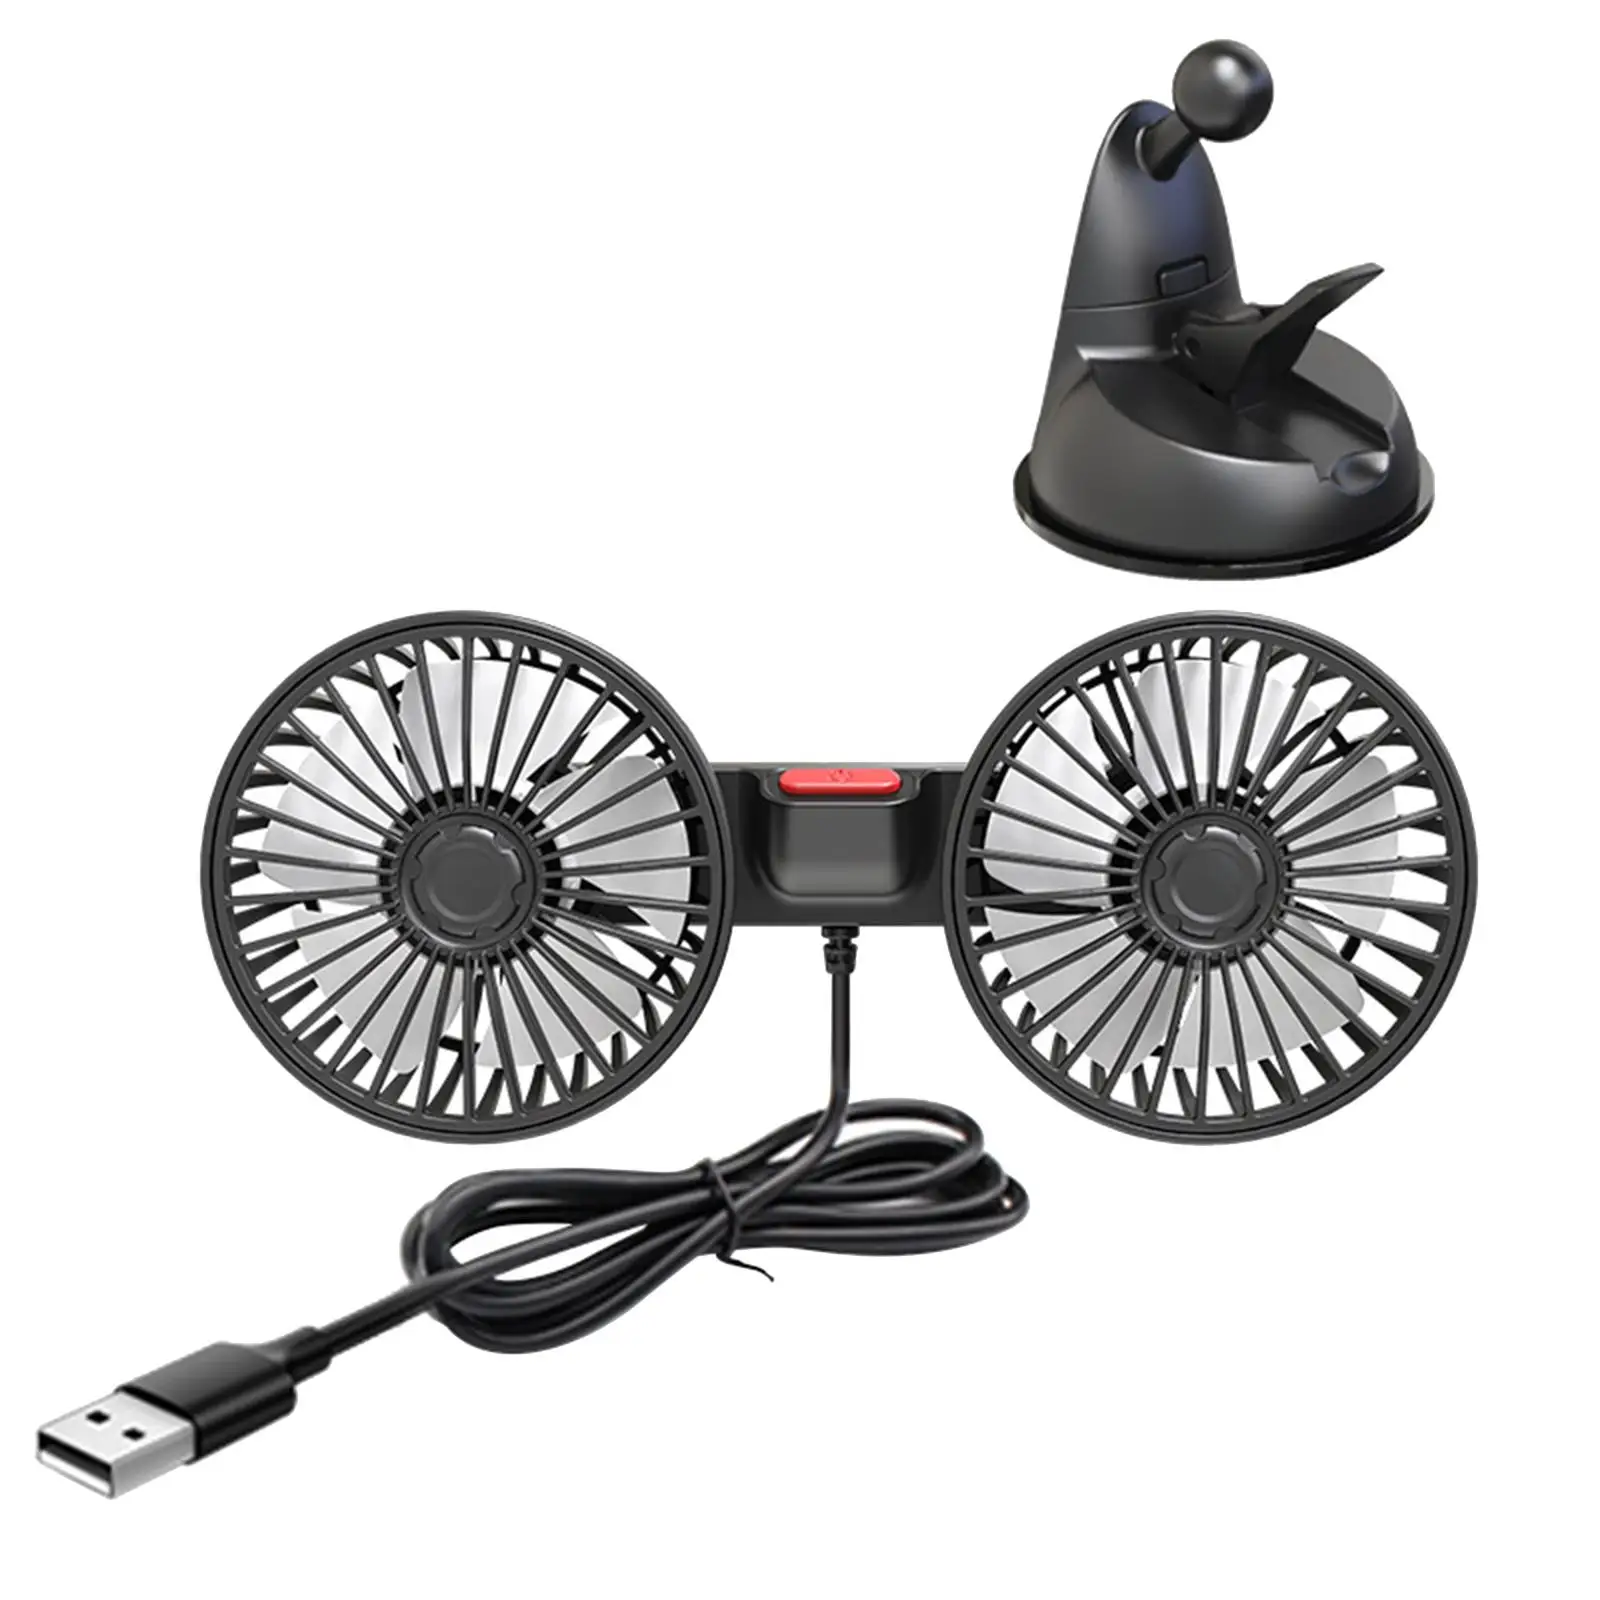 Car Cooling Fan Dual Head 3 Speeds USB Desk Fan Mounted Auto Cooler Air Car Accessories for RV Sedan Dashboard Home Office